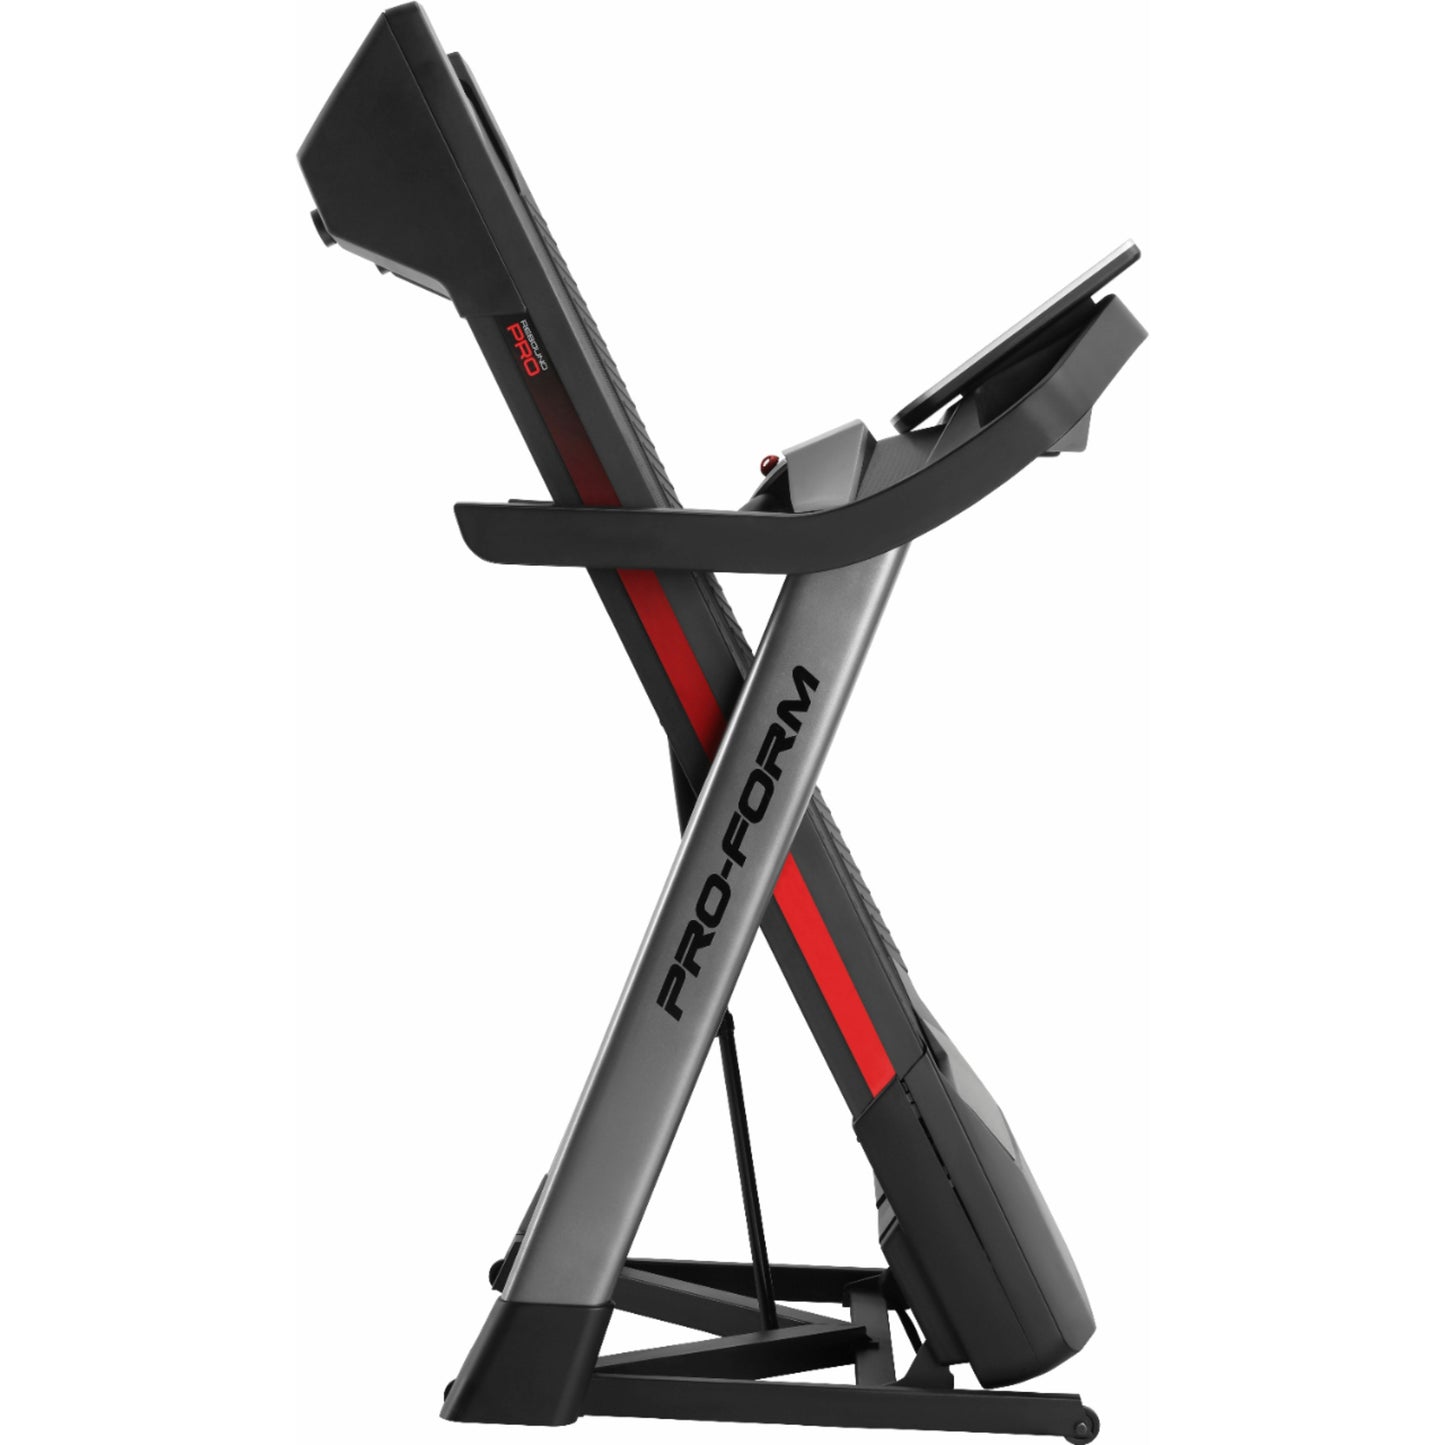 PRO-FORM Pro 2000 treadmill